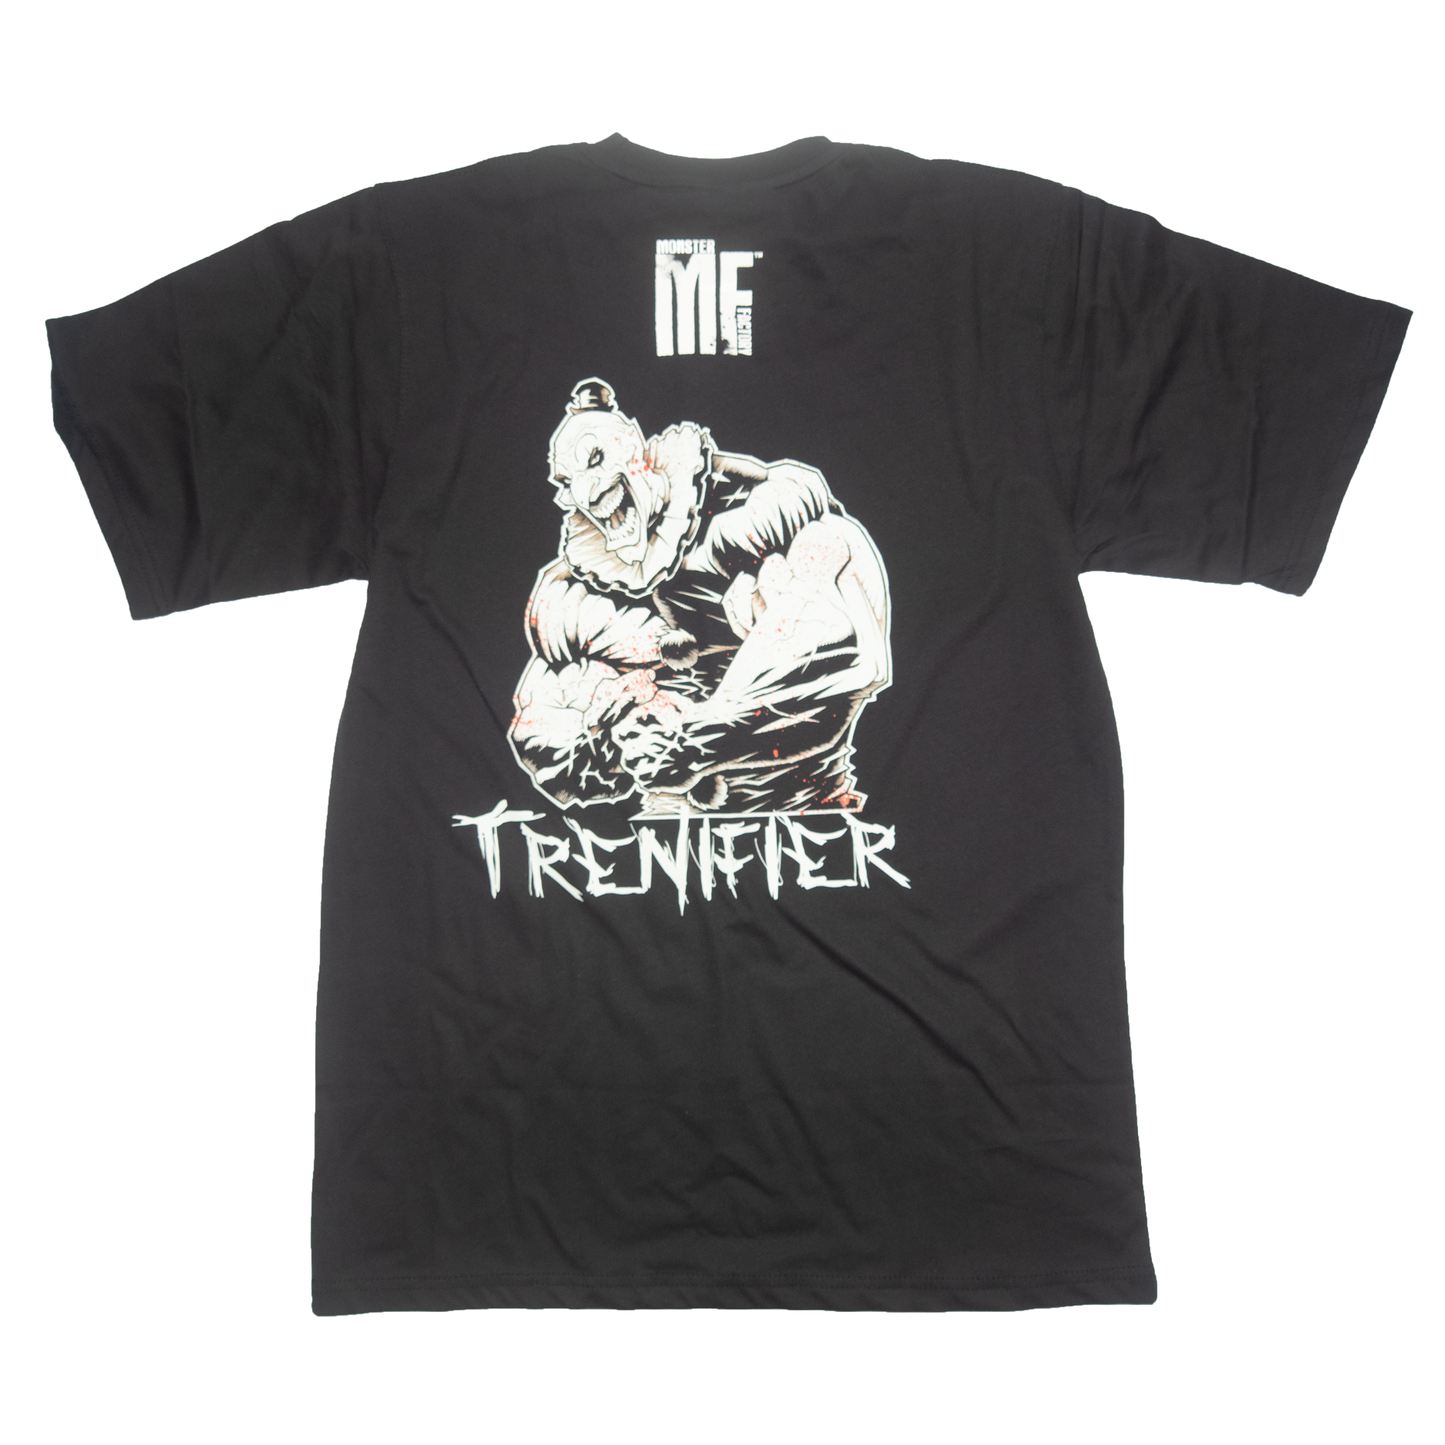 Trenifier T-shirt